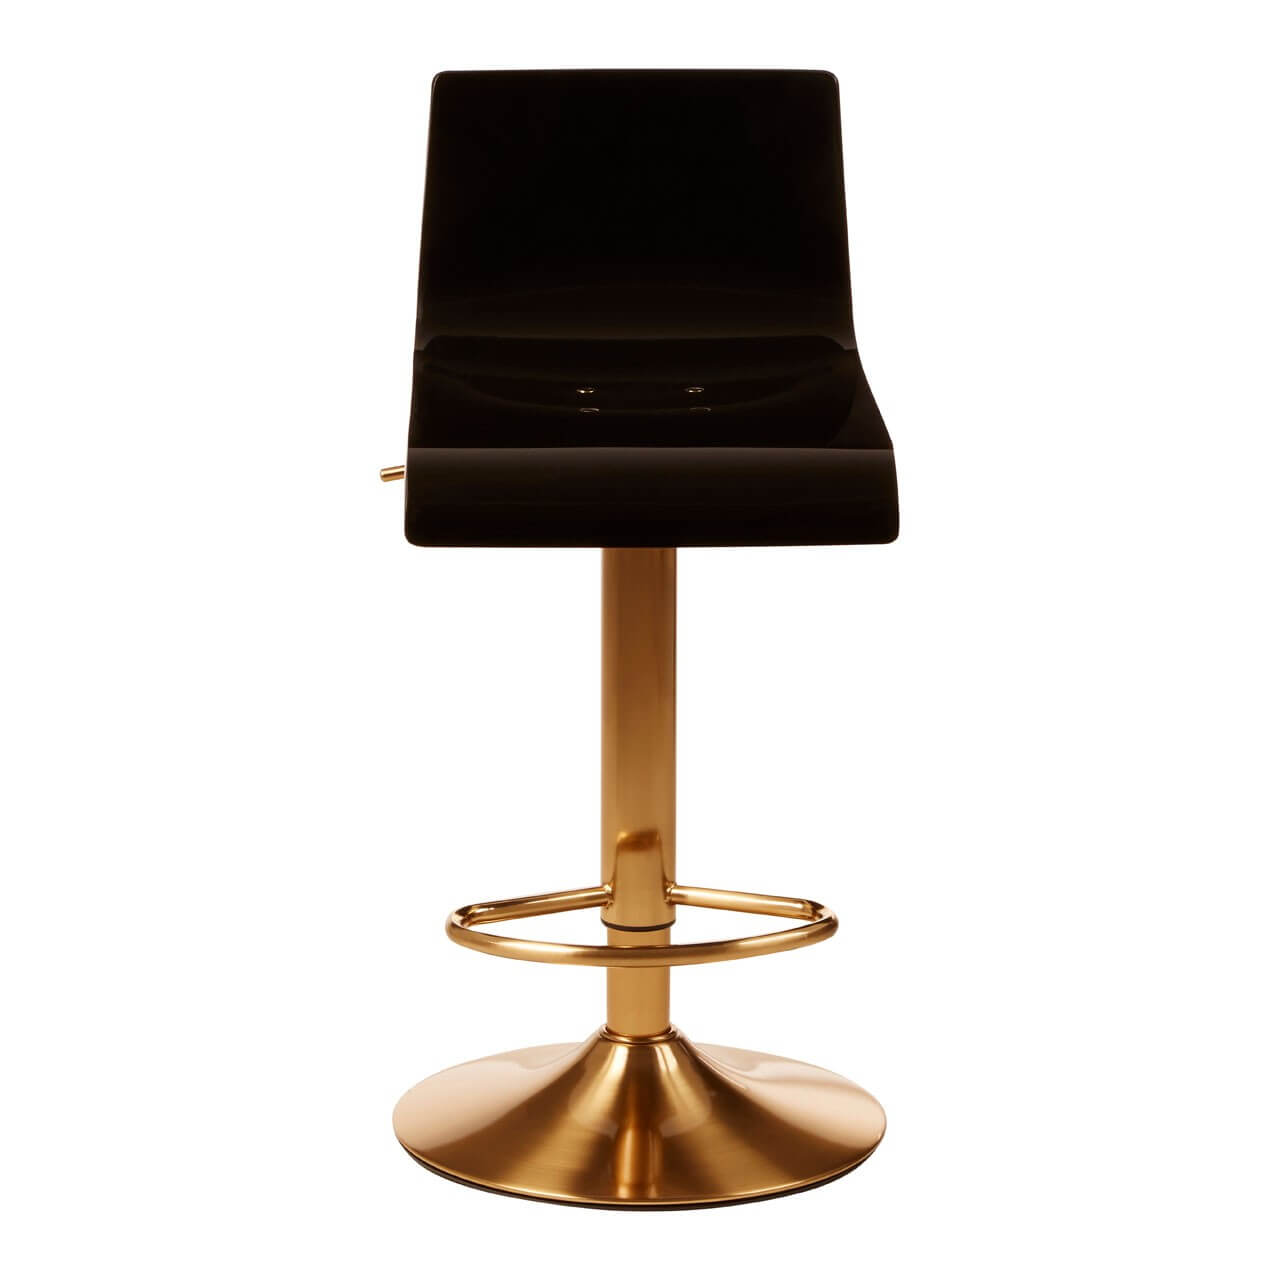 Rigmor Black Acrylic Seat Bar Stool, Acrylic Bar Stools With Gold Legs